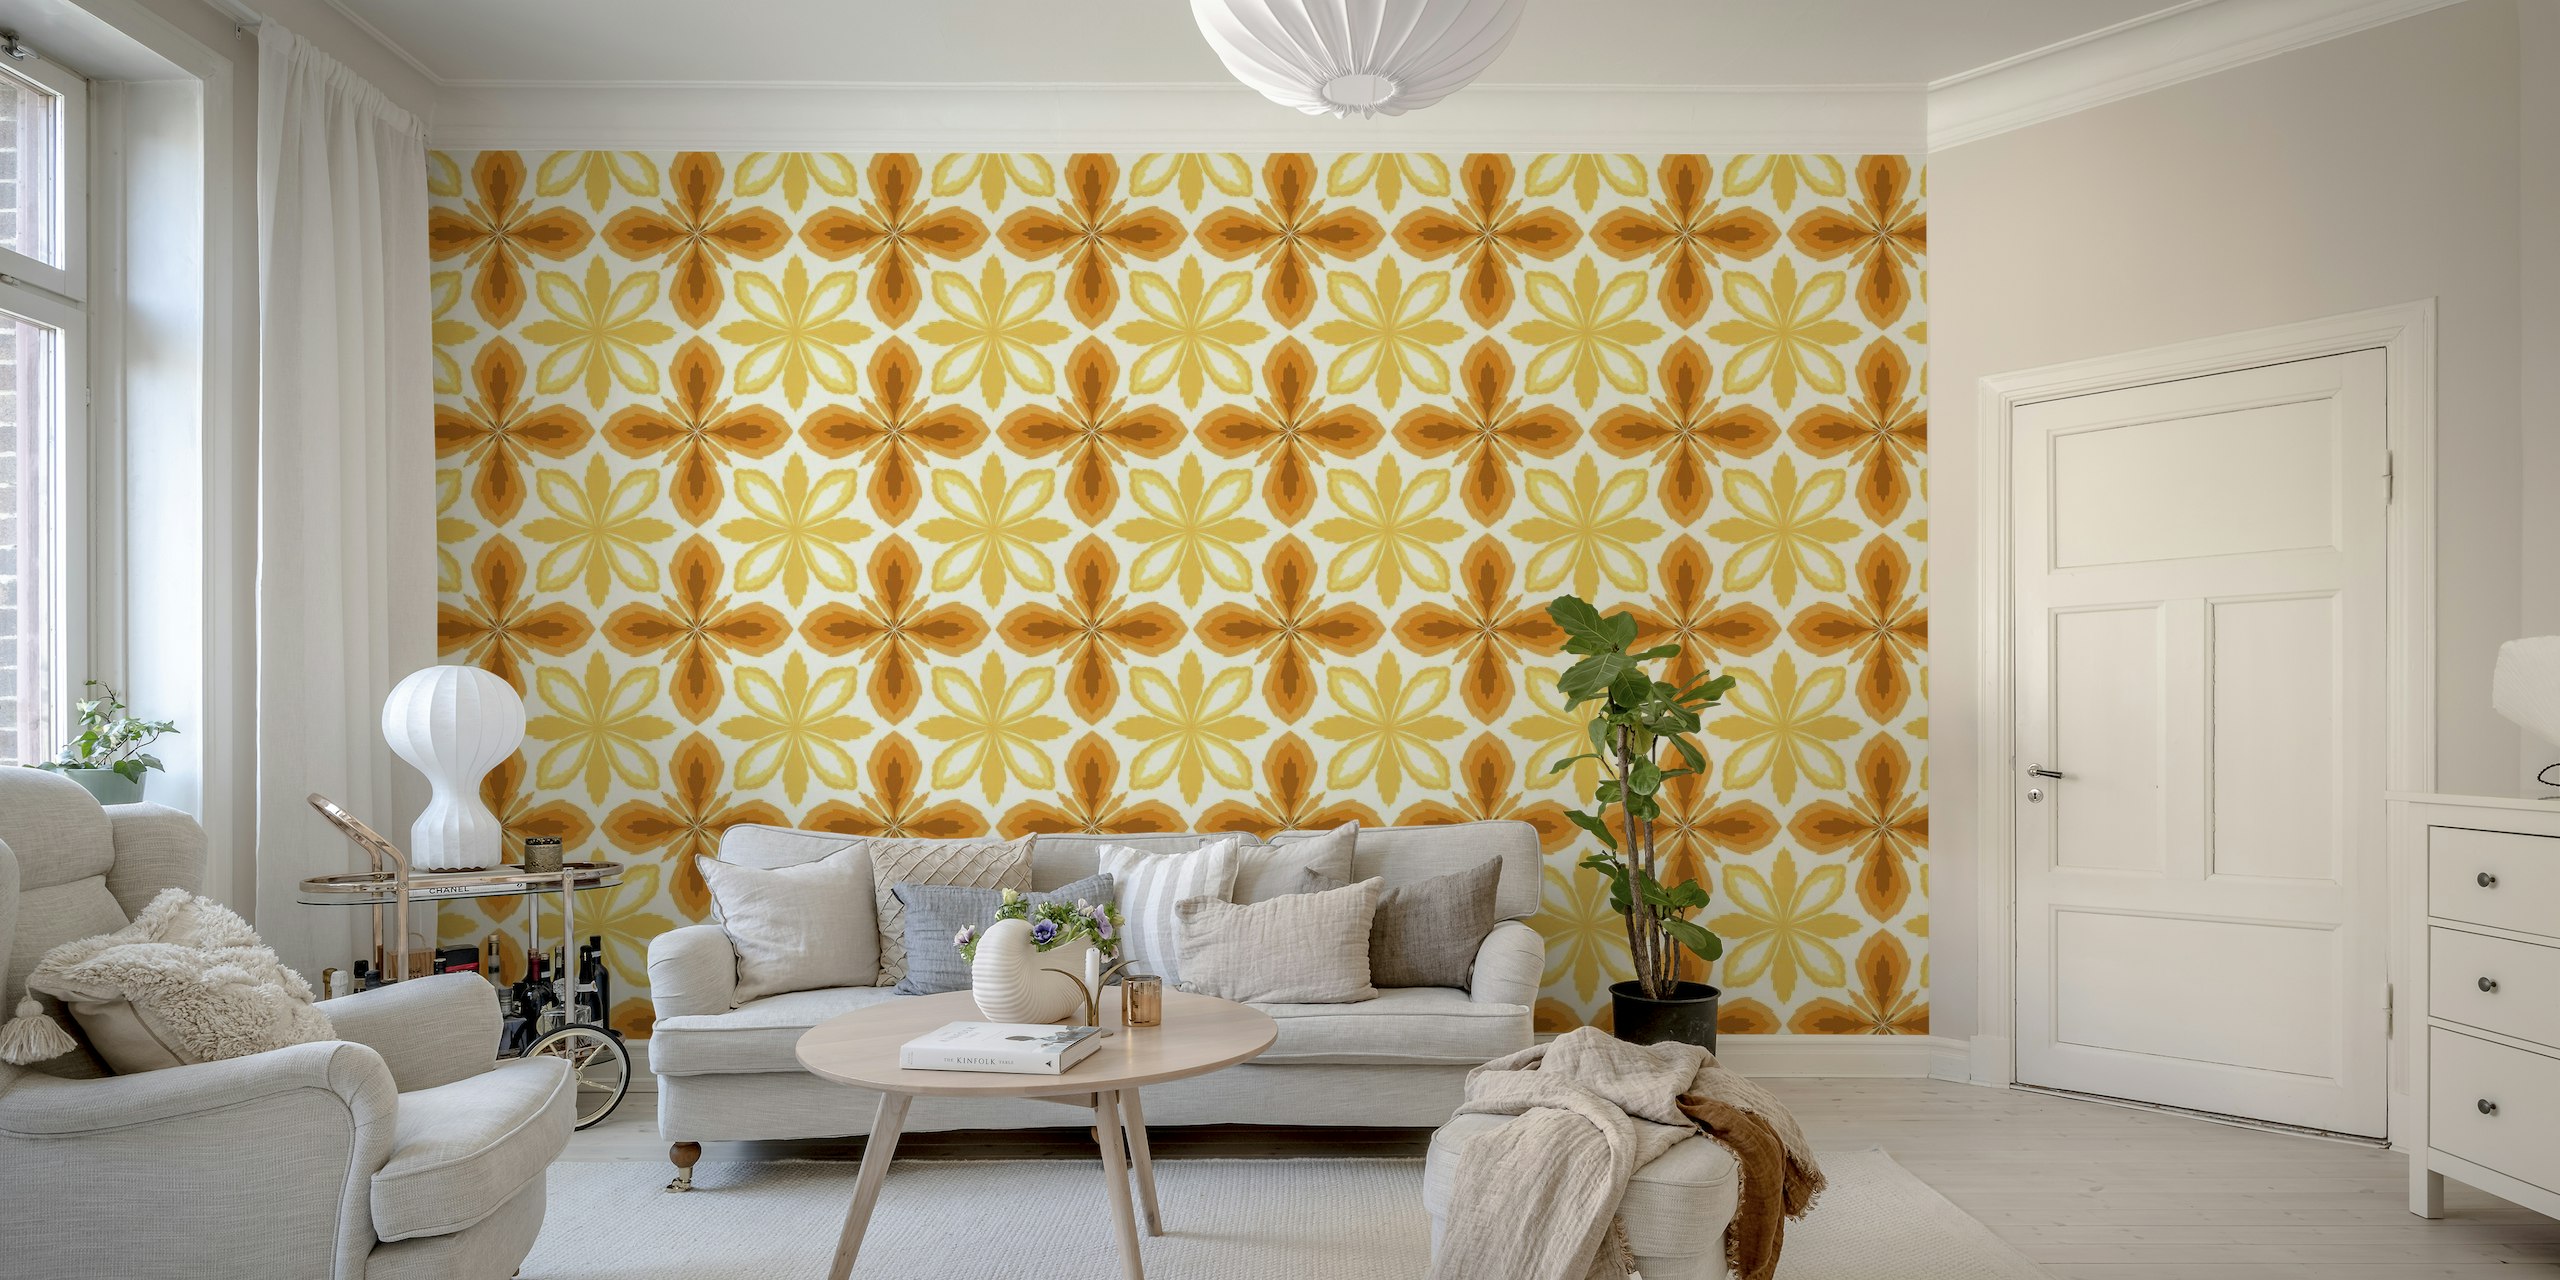 Ornate tiles, yellow and orange 2 behang